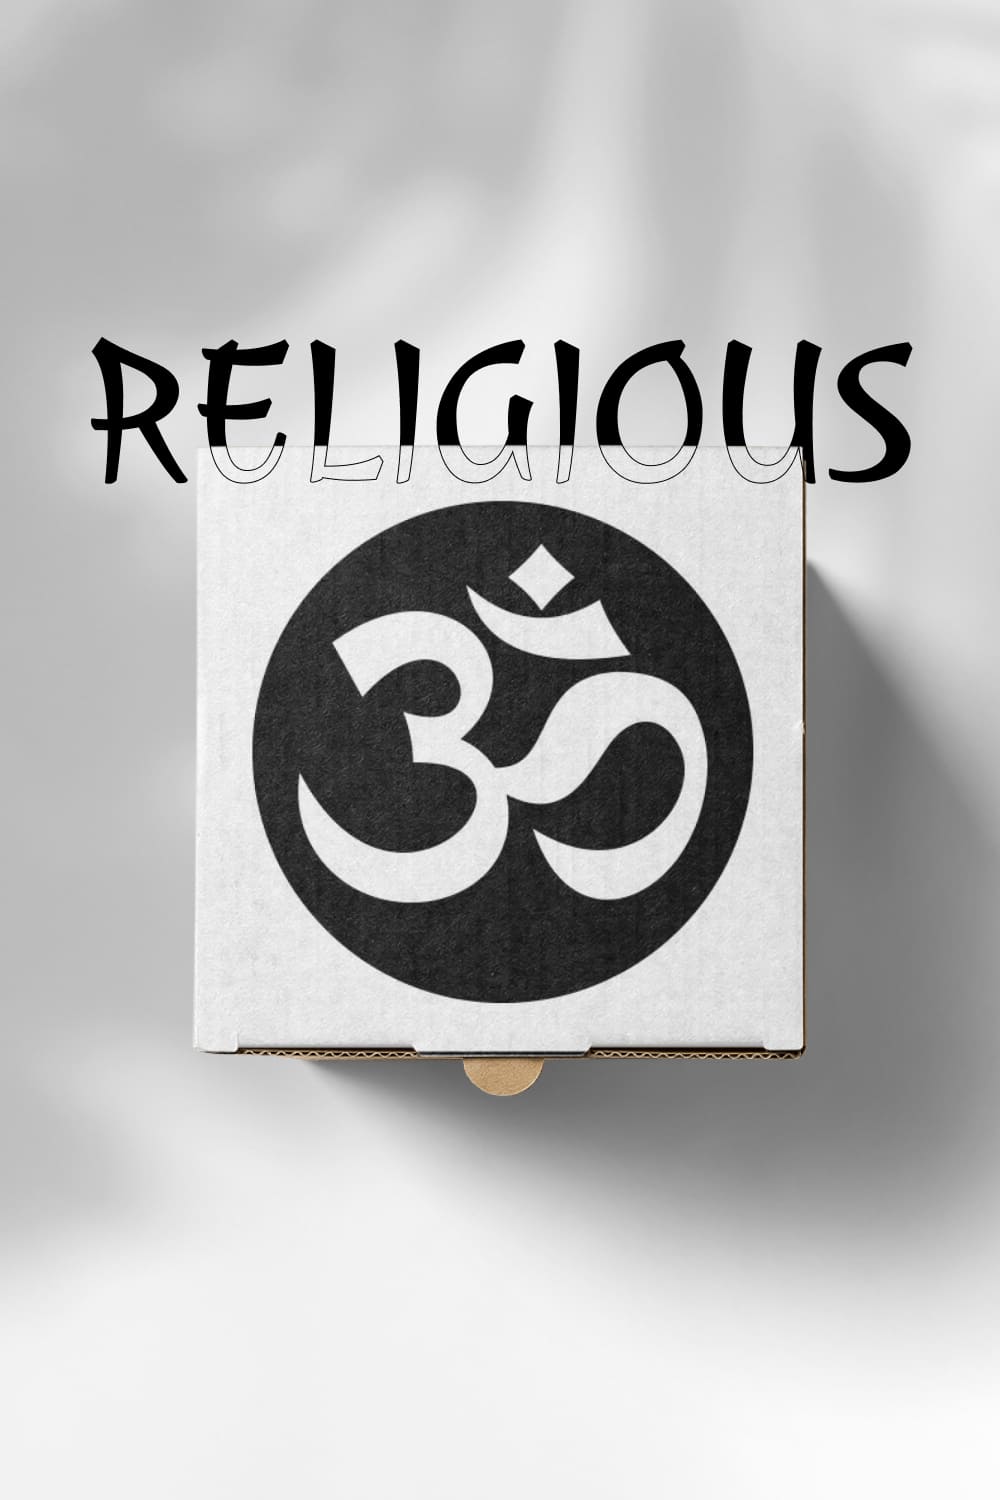 Religious symbol icons setof pinterest.